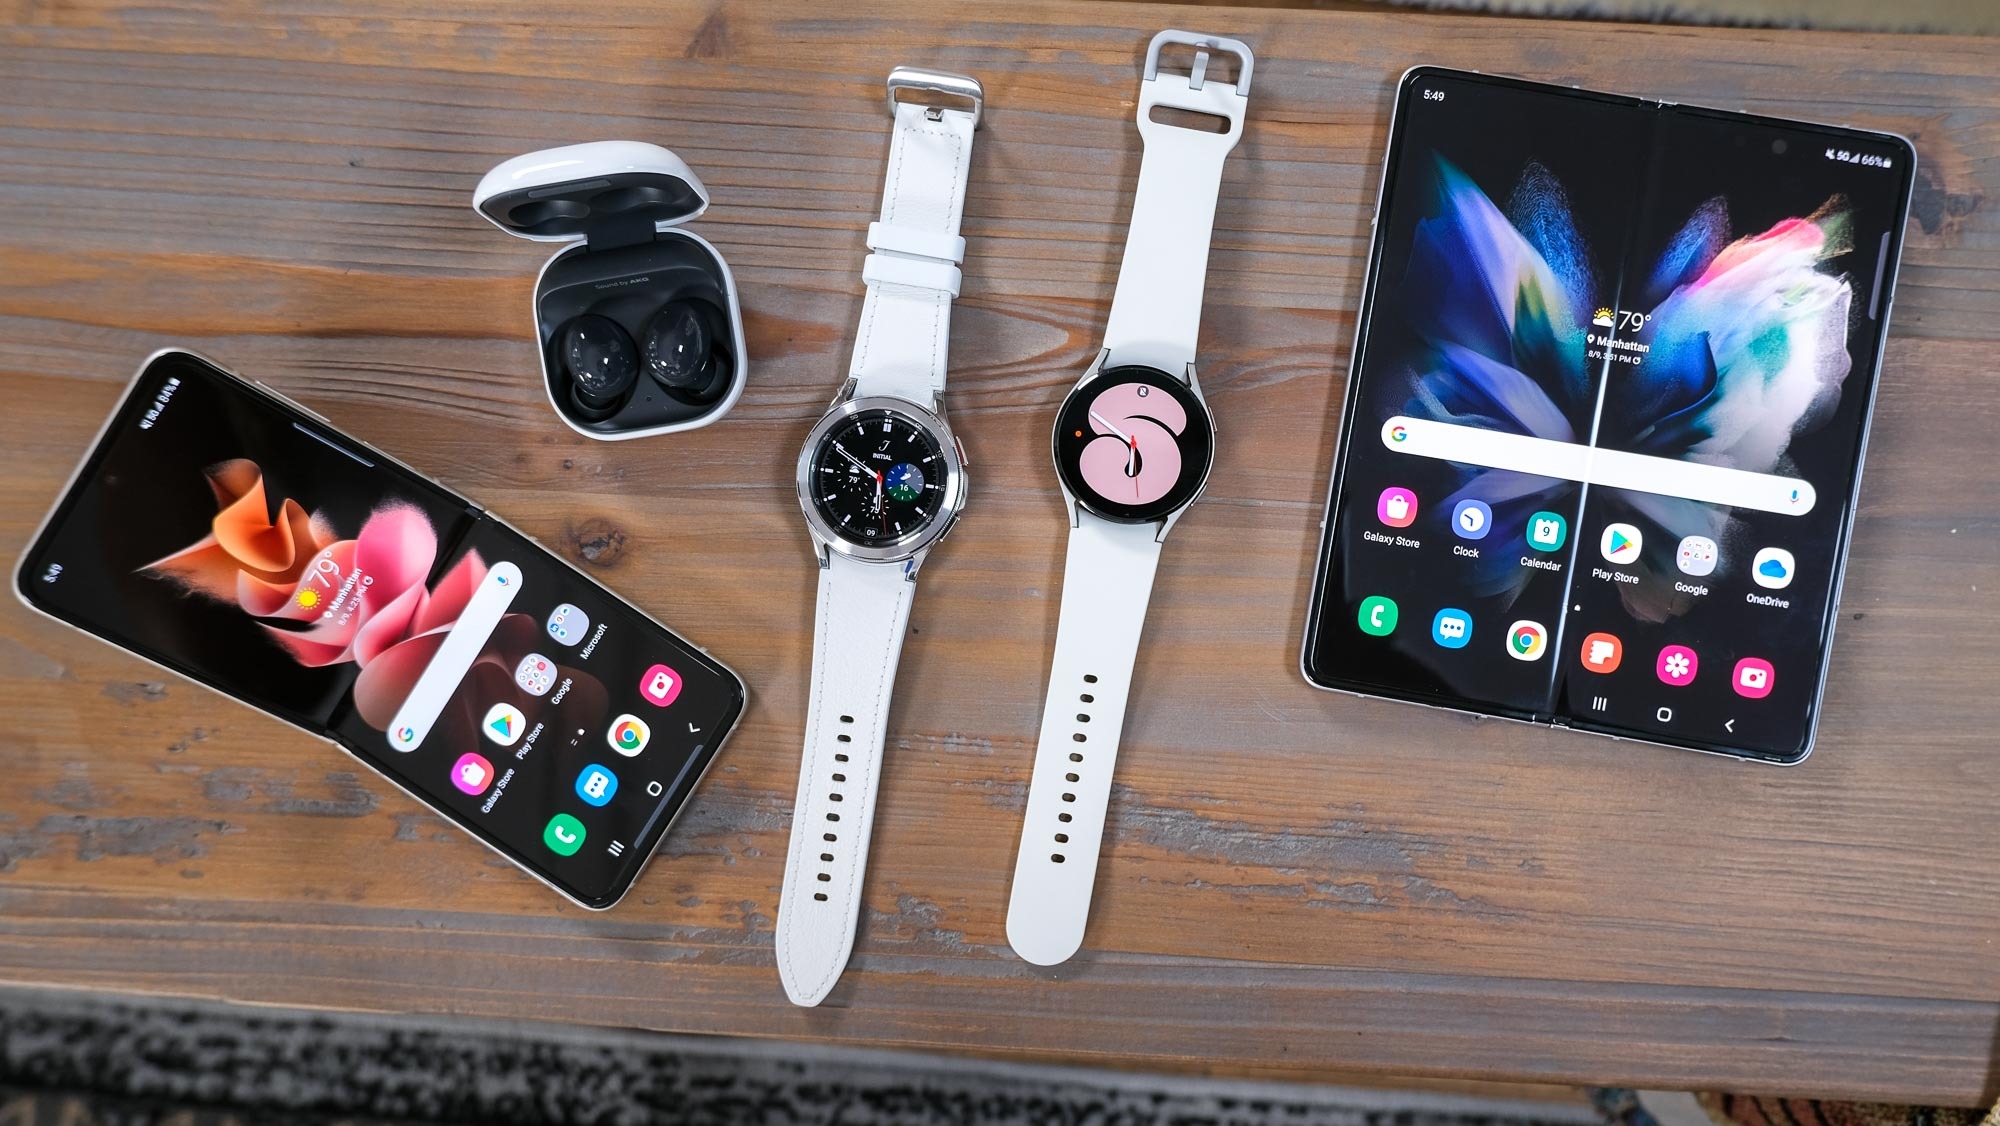 Samsung Unpacked Live Blog: Galaxy Z Fold 4, Z Flip 4, Watch 5